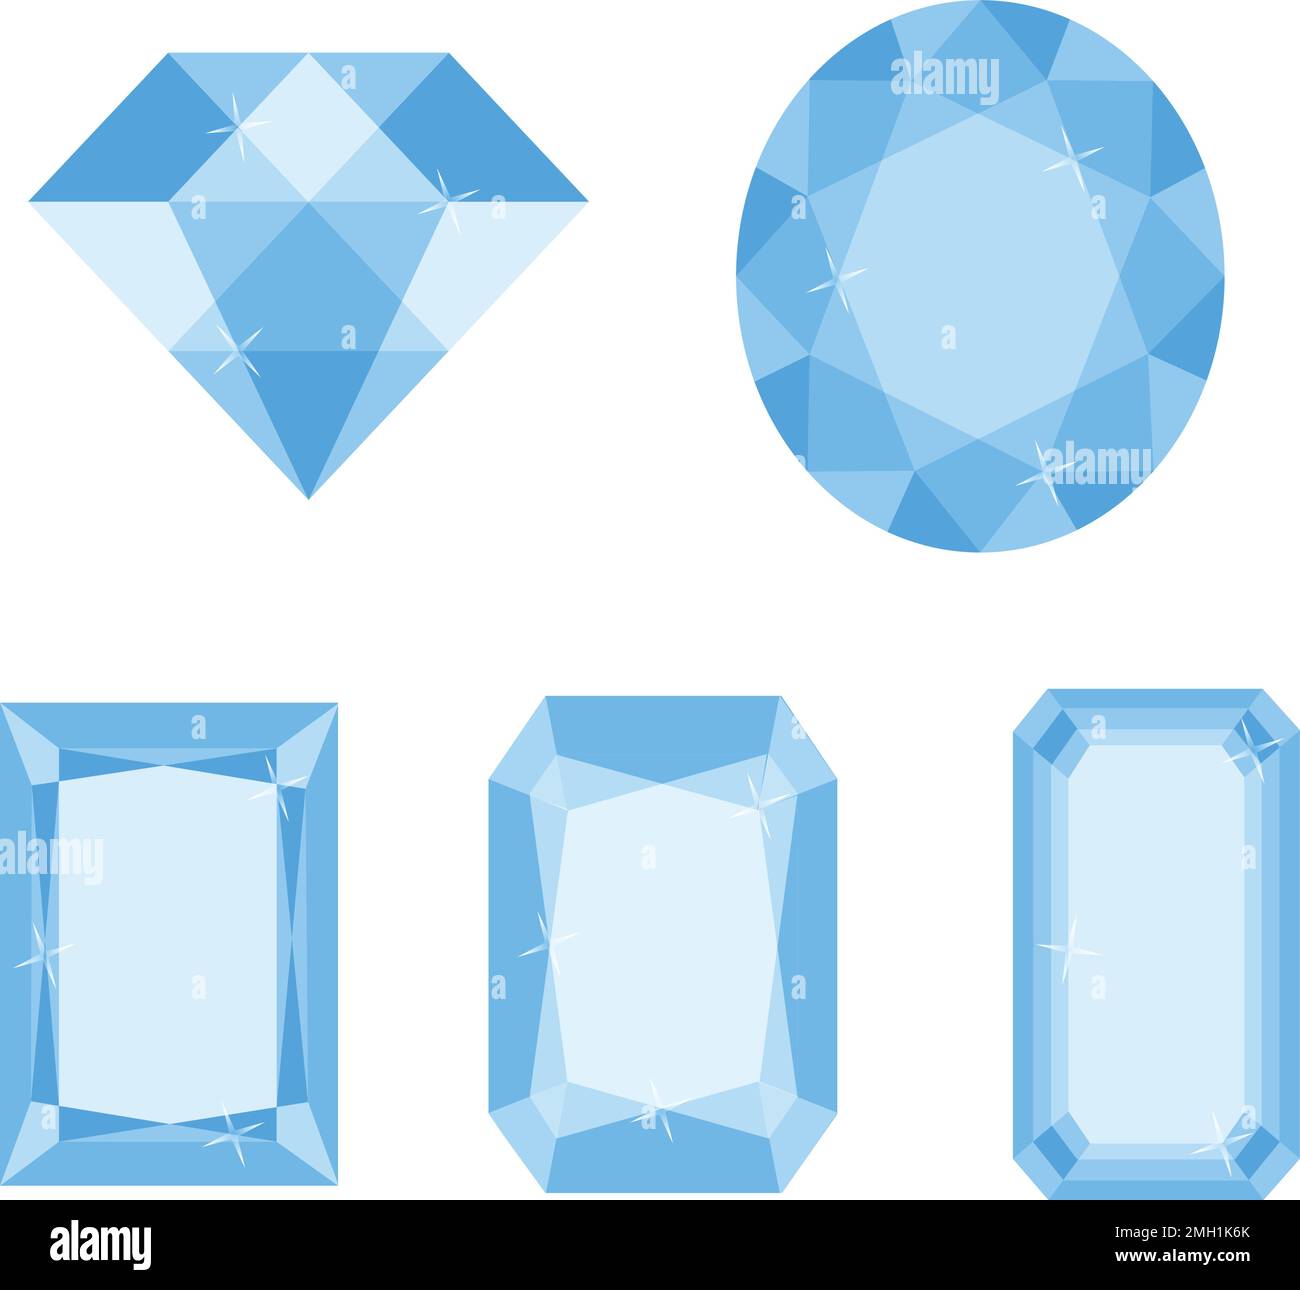 diamond vector illustration. diamond clip art image Stock Vector Image ...